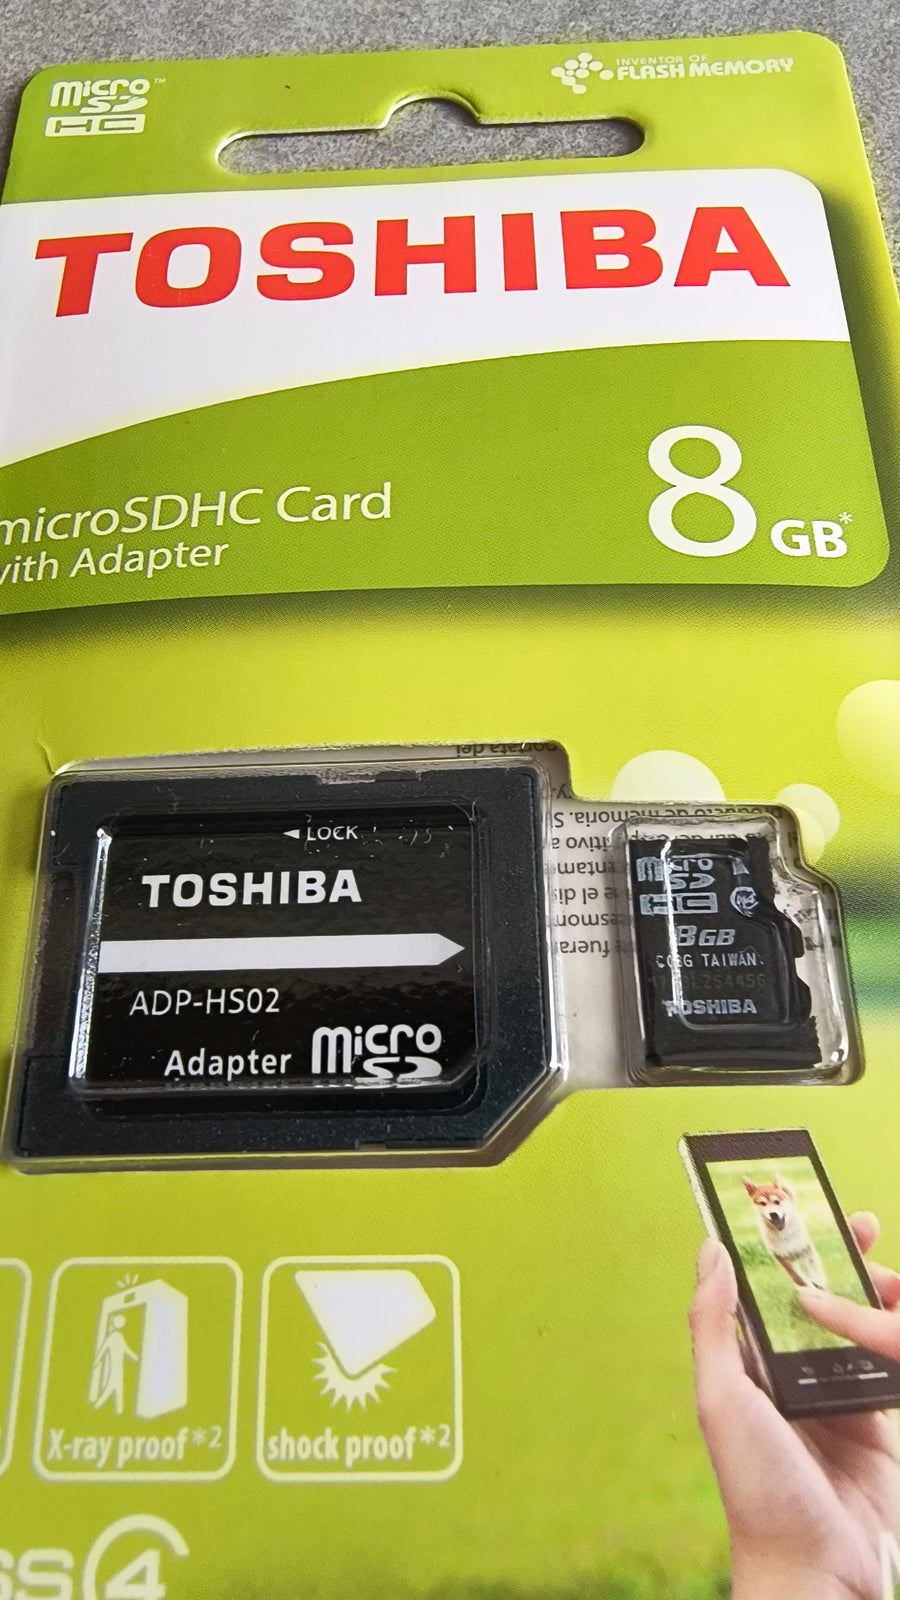 Micro SDHC kort med Adapter, Toshiba, 8GB GB